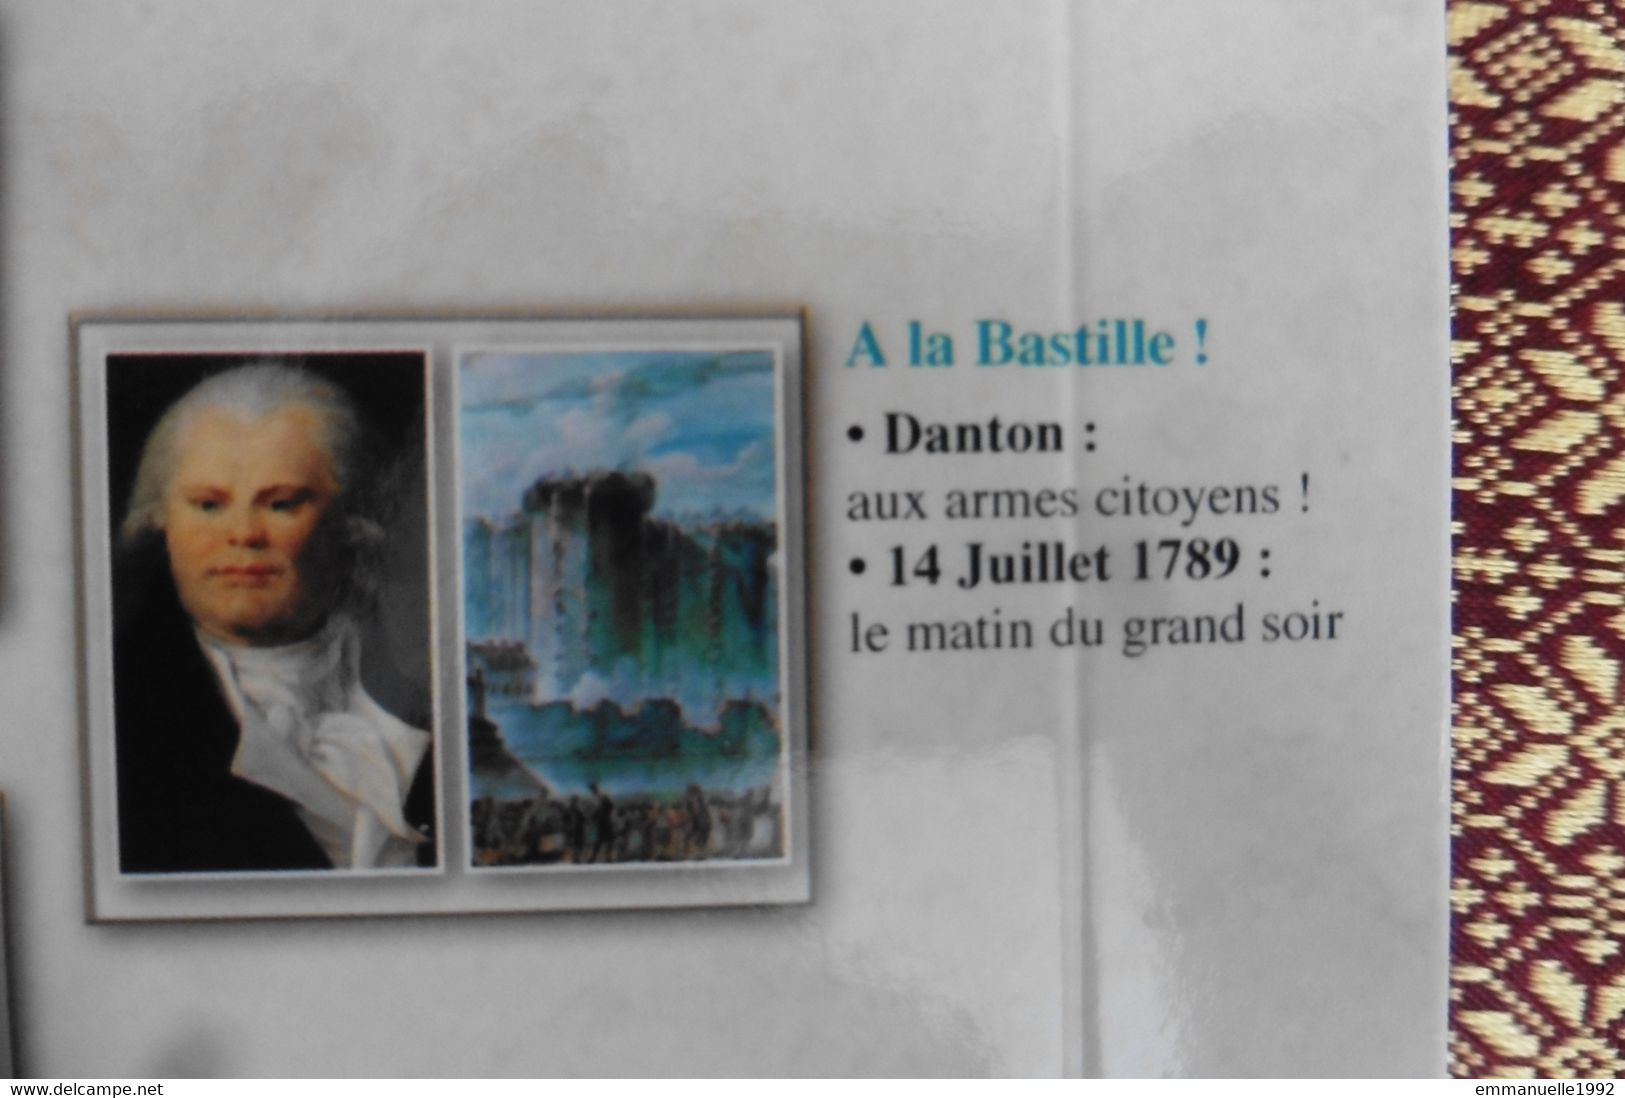 DVD Secrets D'Histoire Stéphane Bern - Danton 14 Juillet 1789 Révolution France - Sans Boitier - Documentary